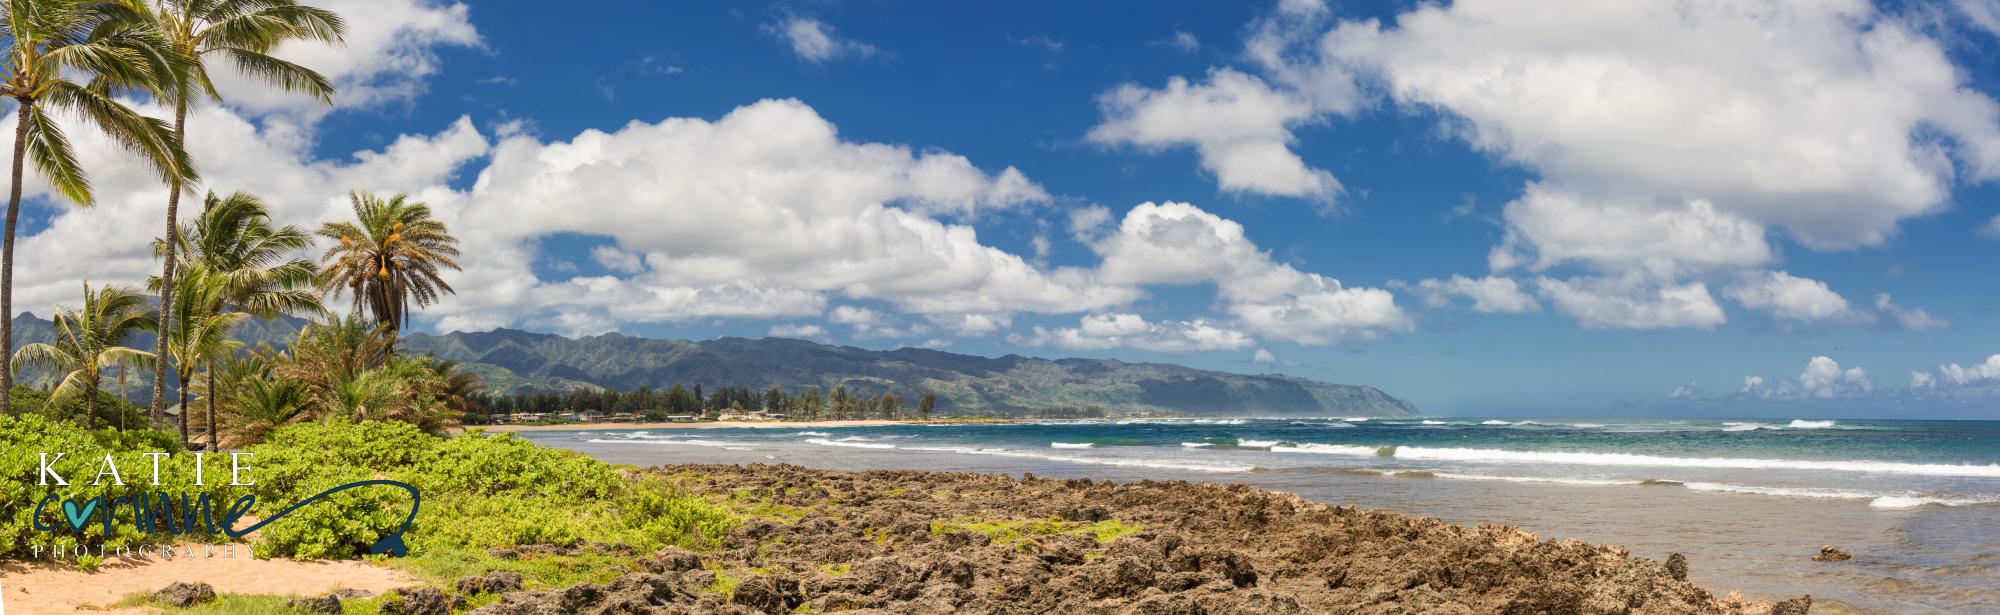 Hawaiian Landscape Photography